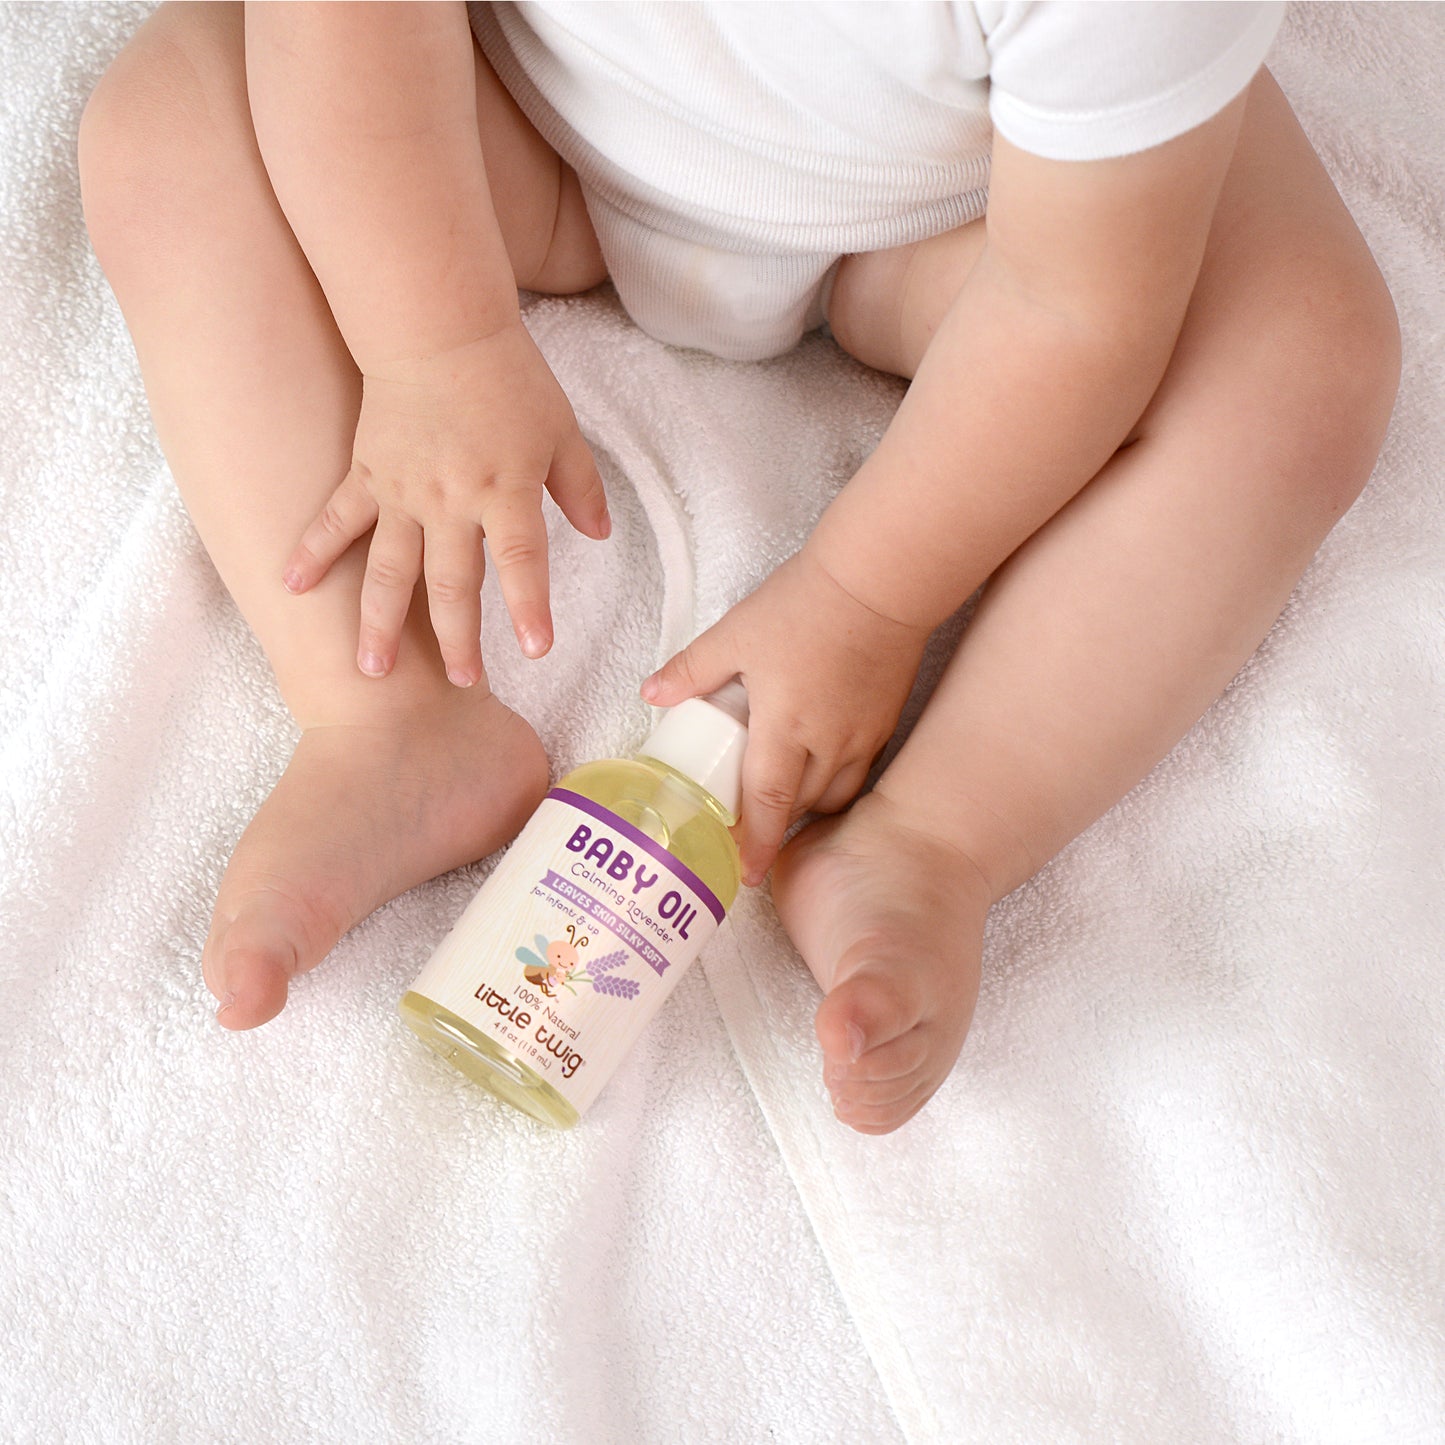 Baby Oil (Calming Lavender)